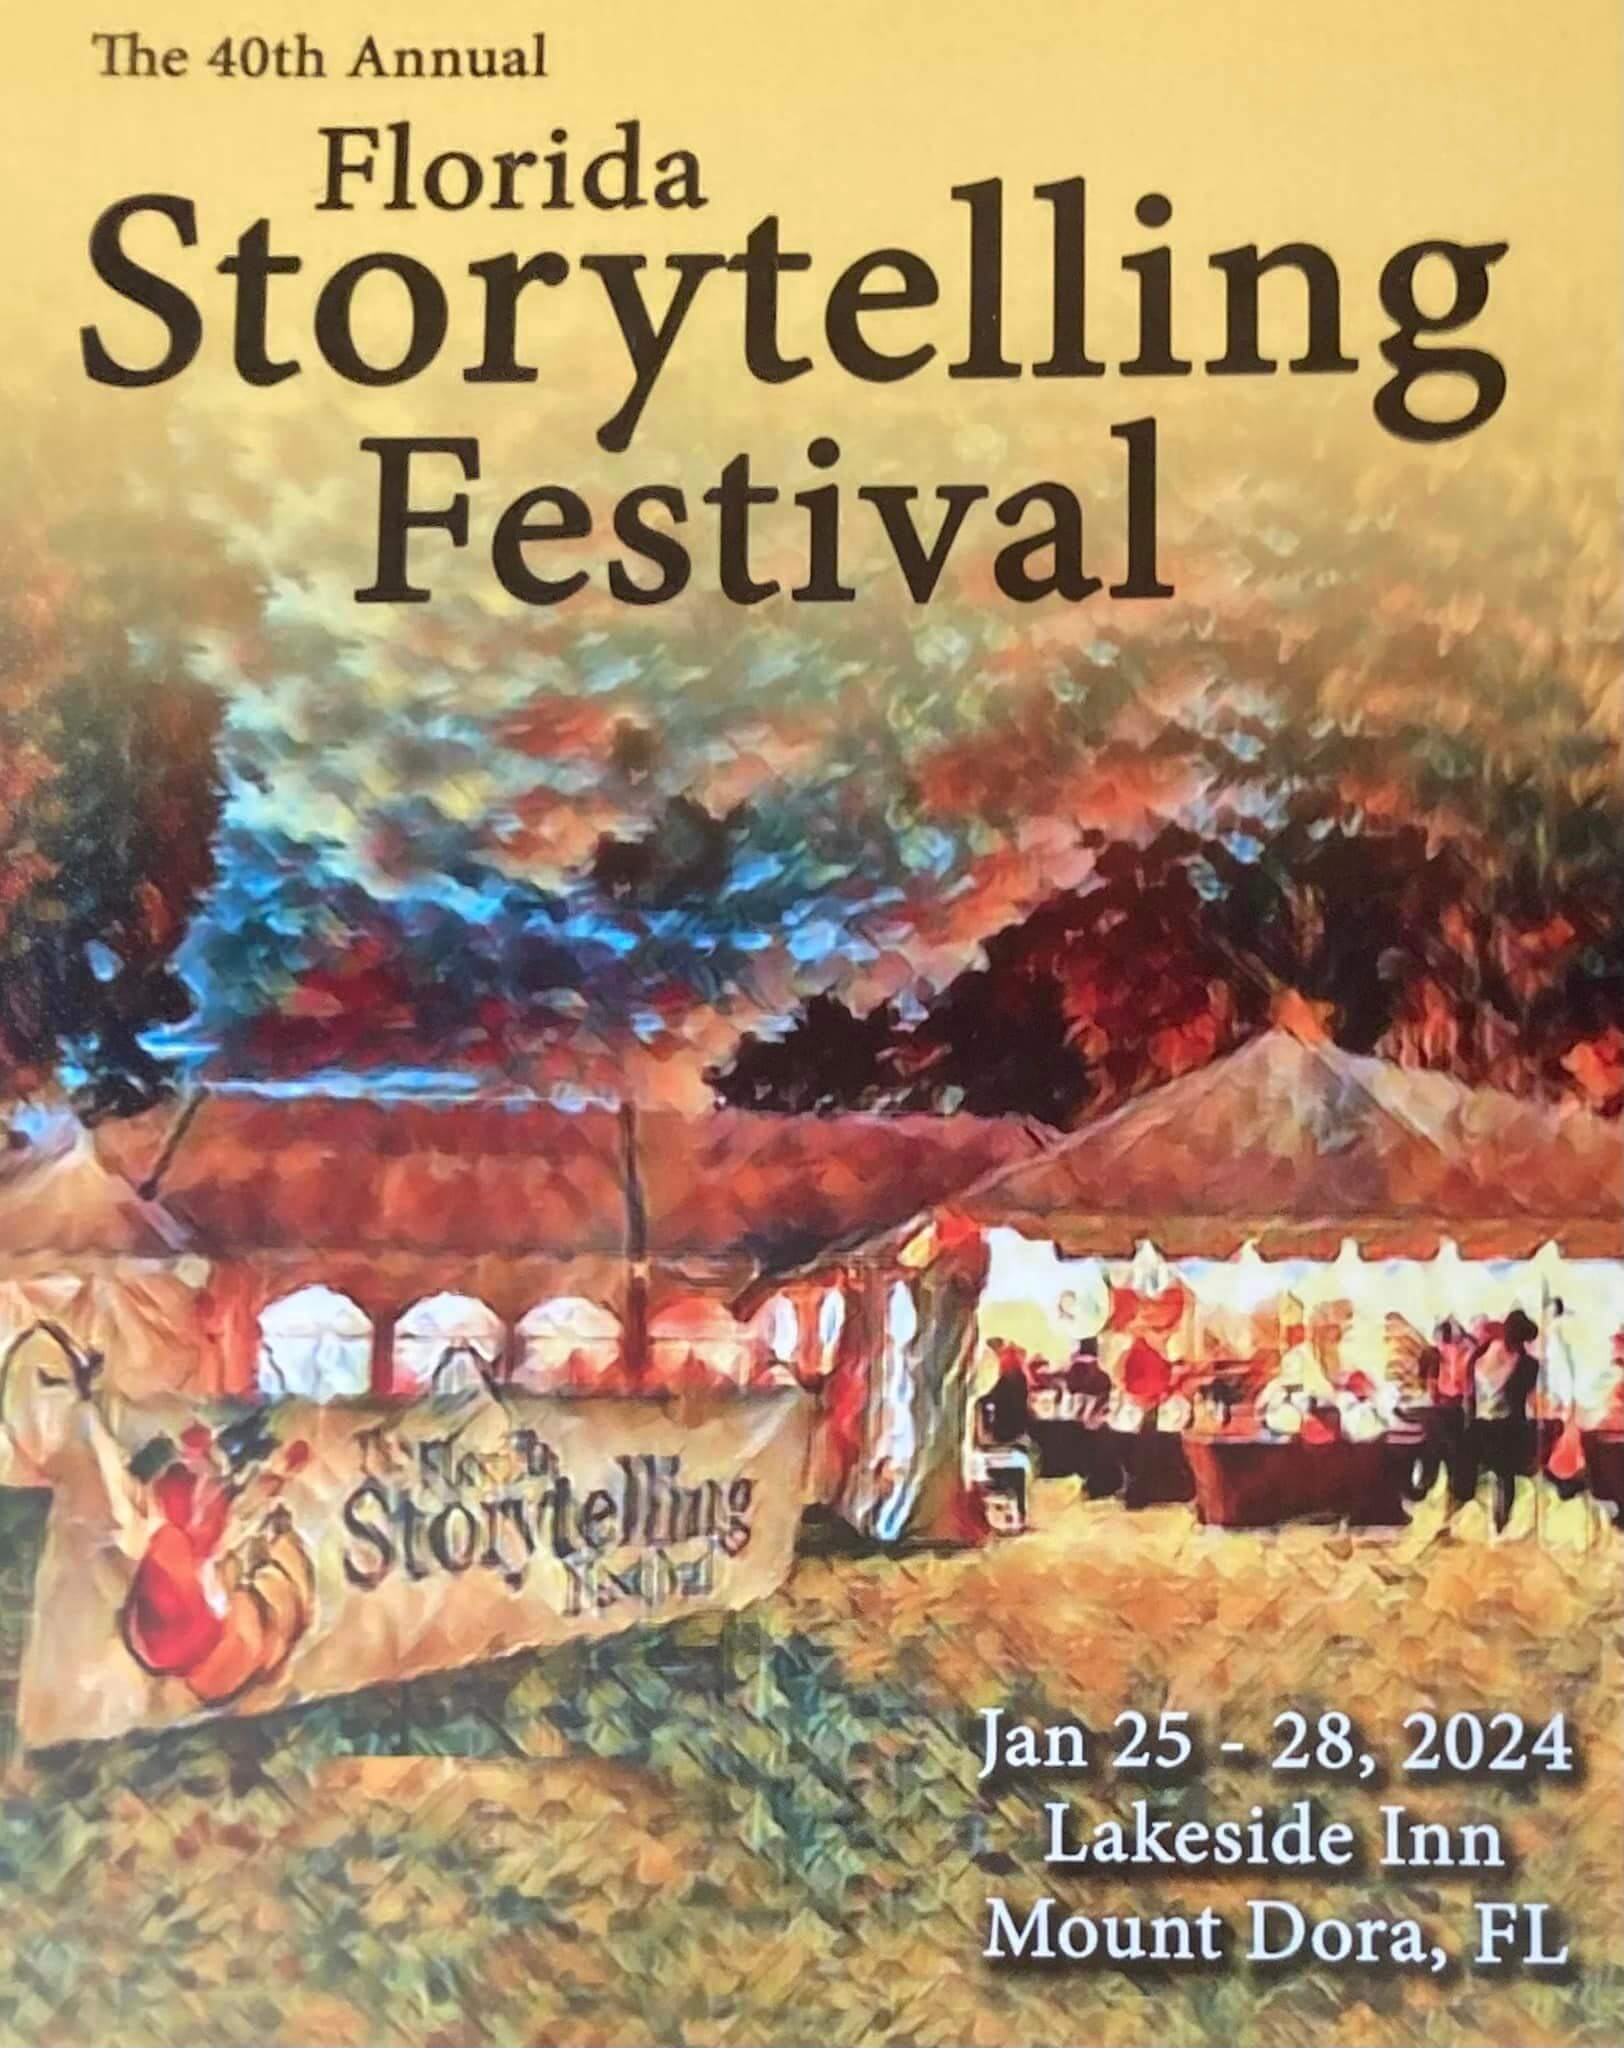 Florida Storytelling Festival promotional flyer